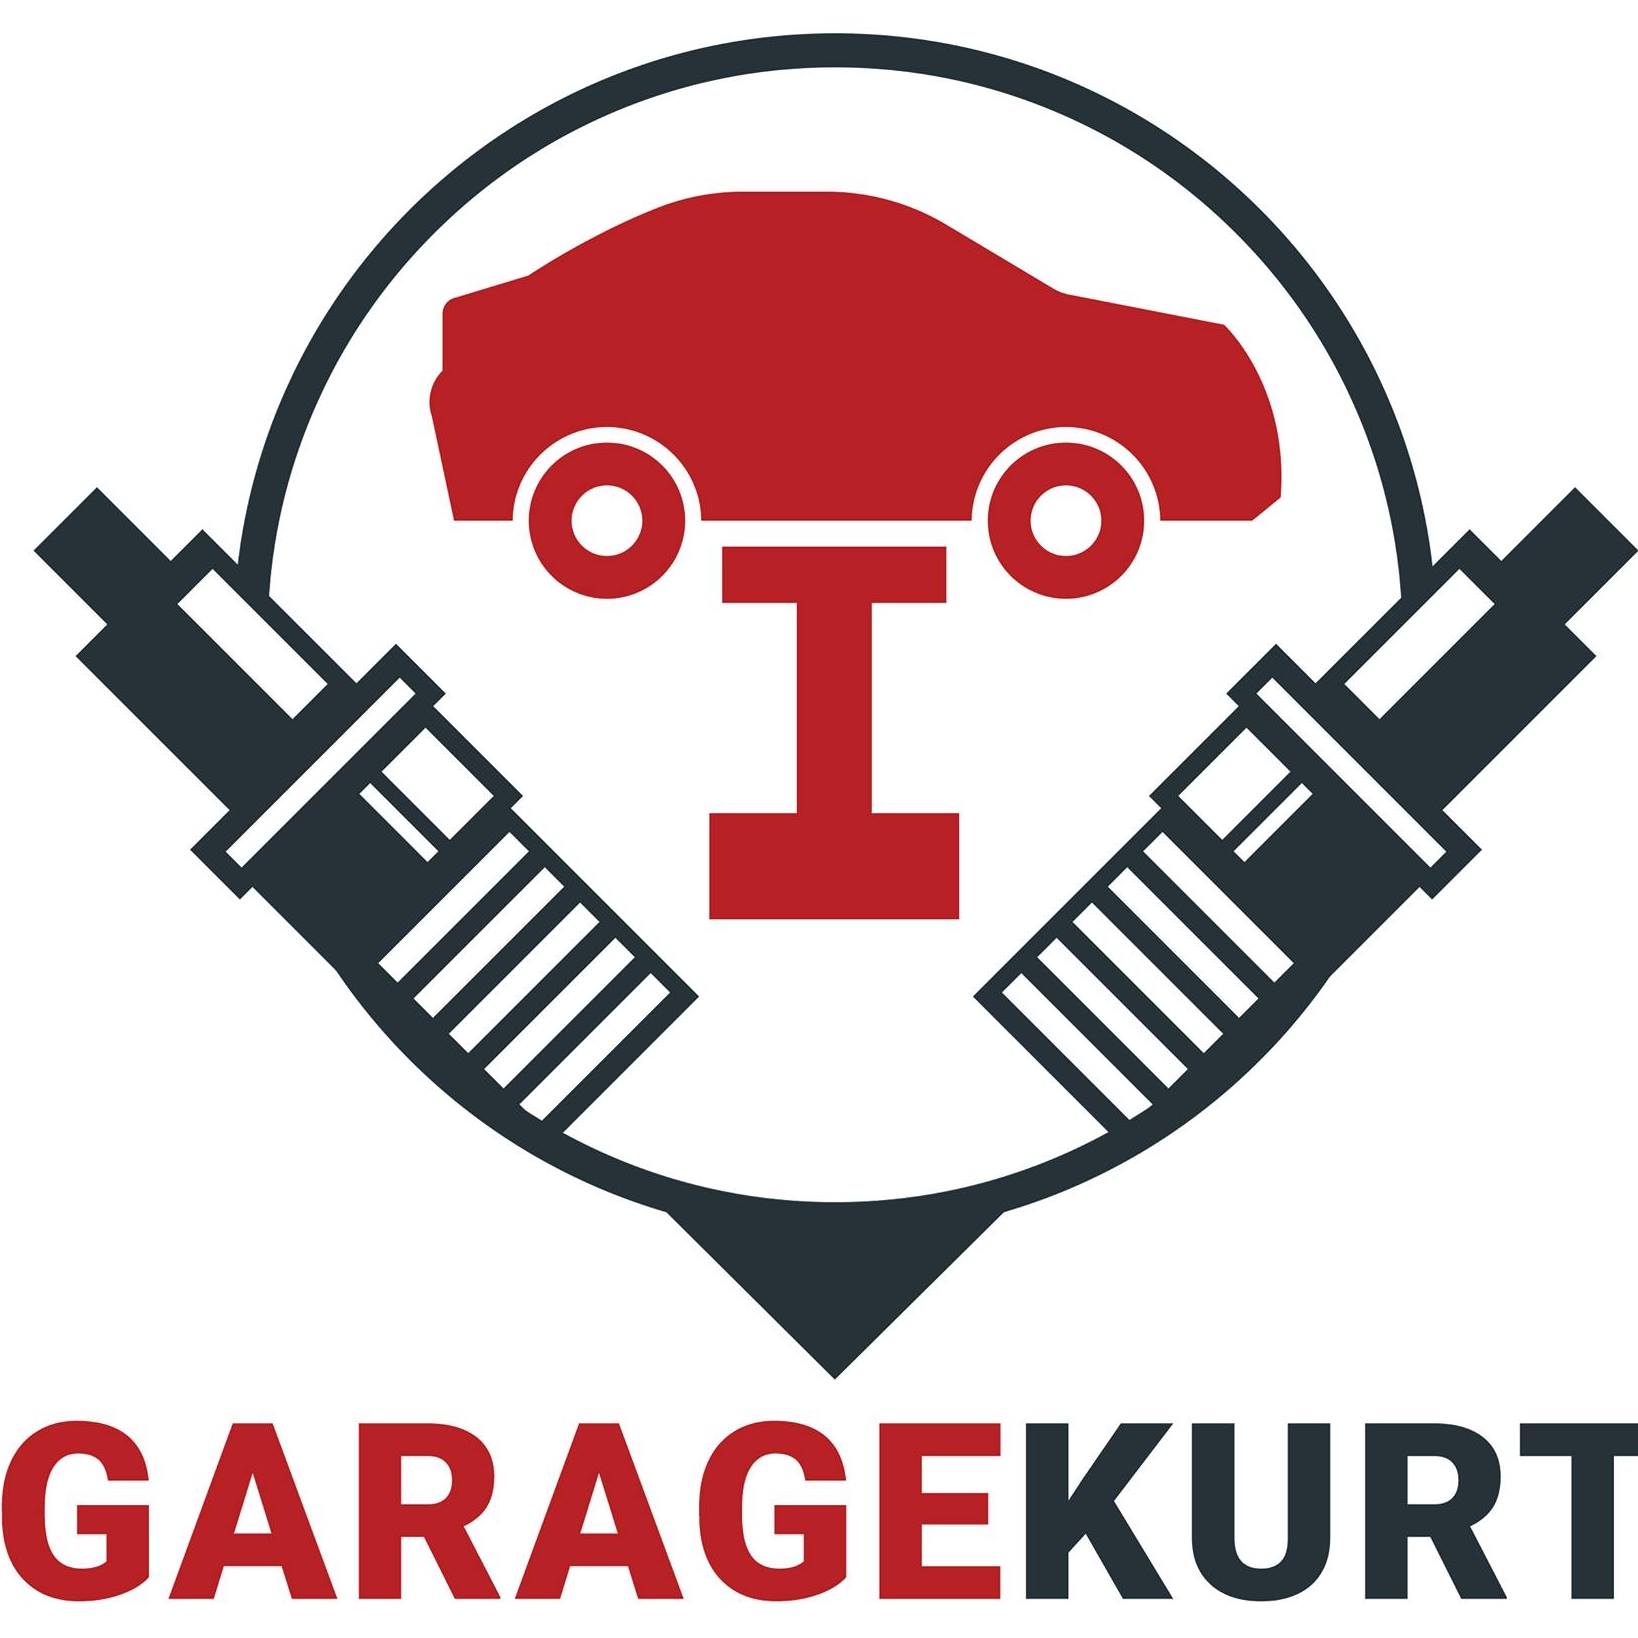 Garage Kurt